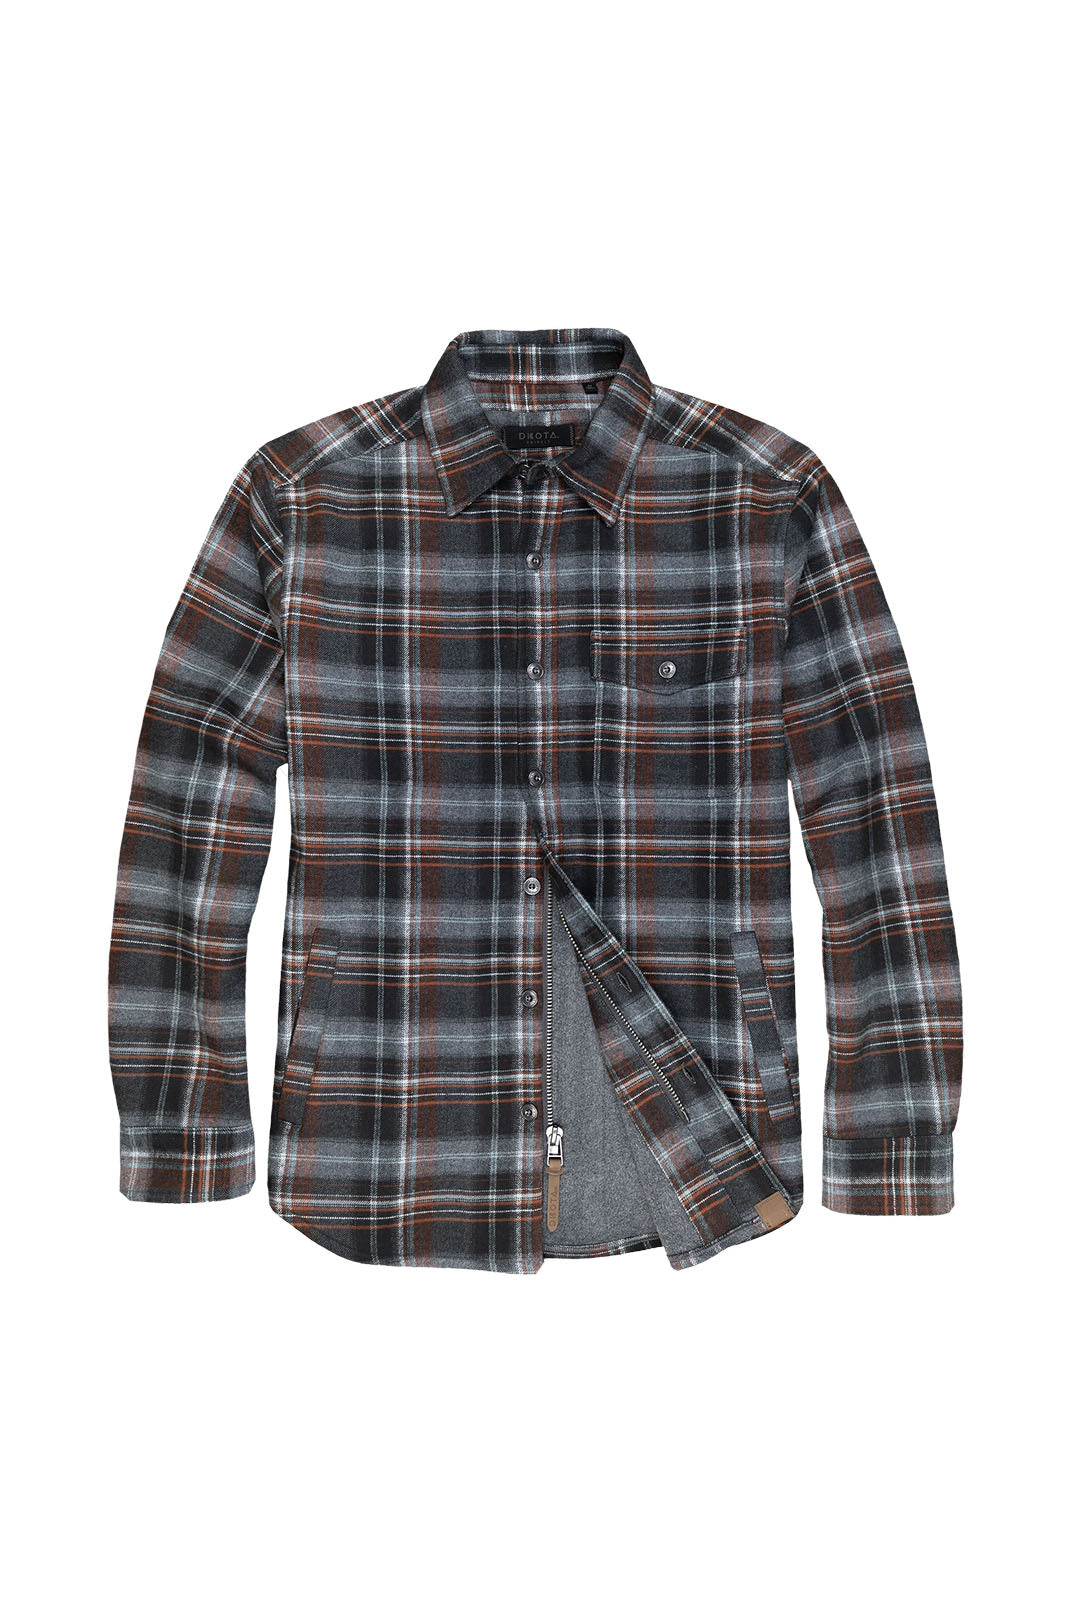 Wade Flannel Shirt Jacket - Charcoal